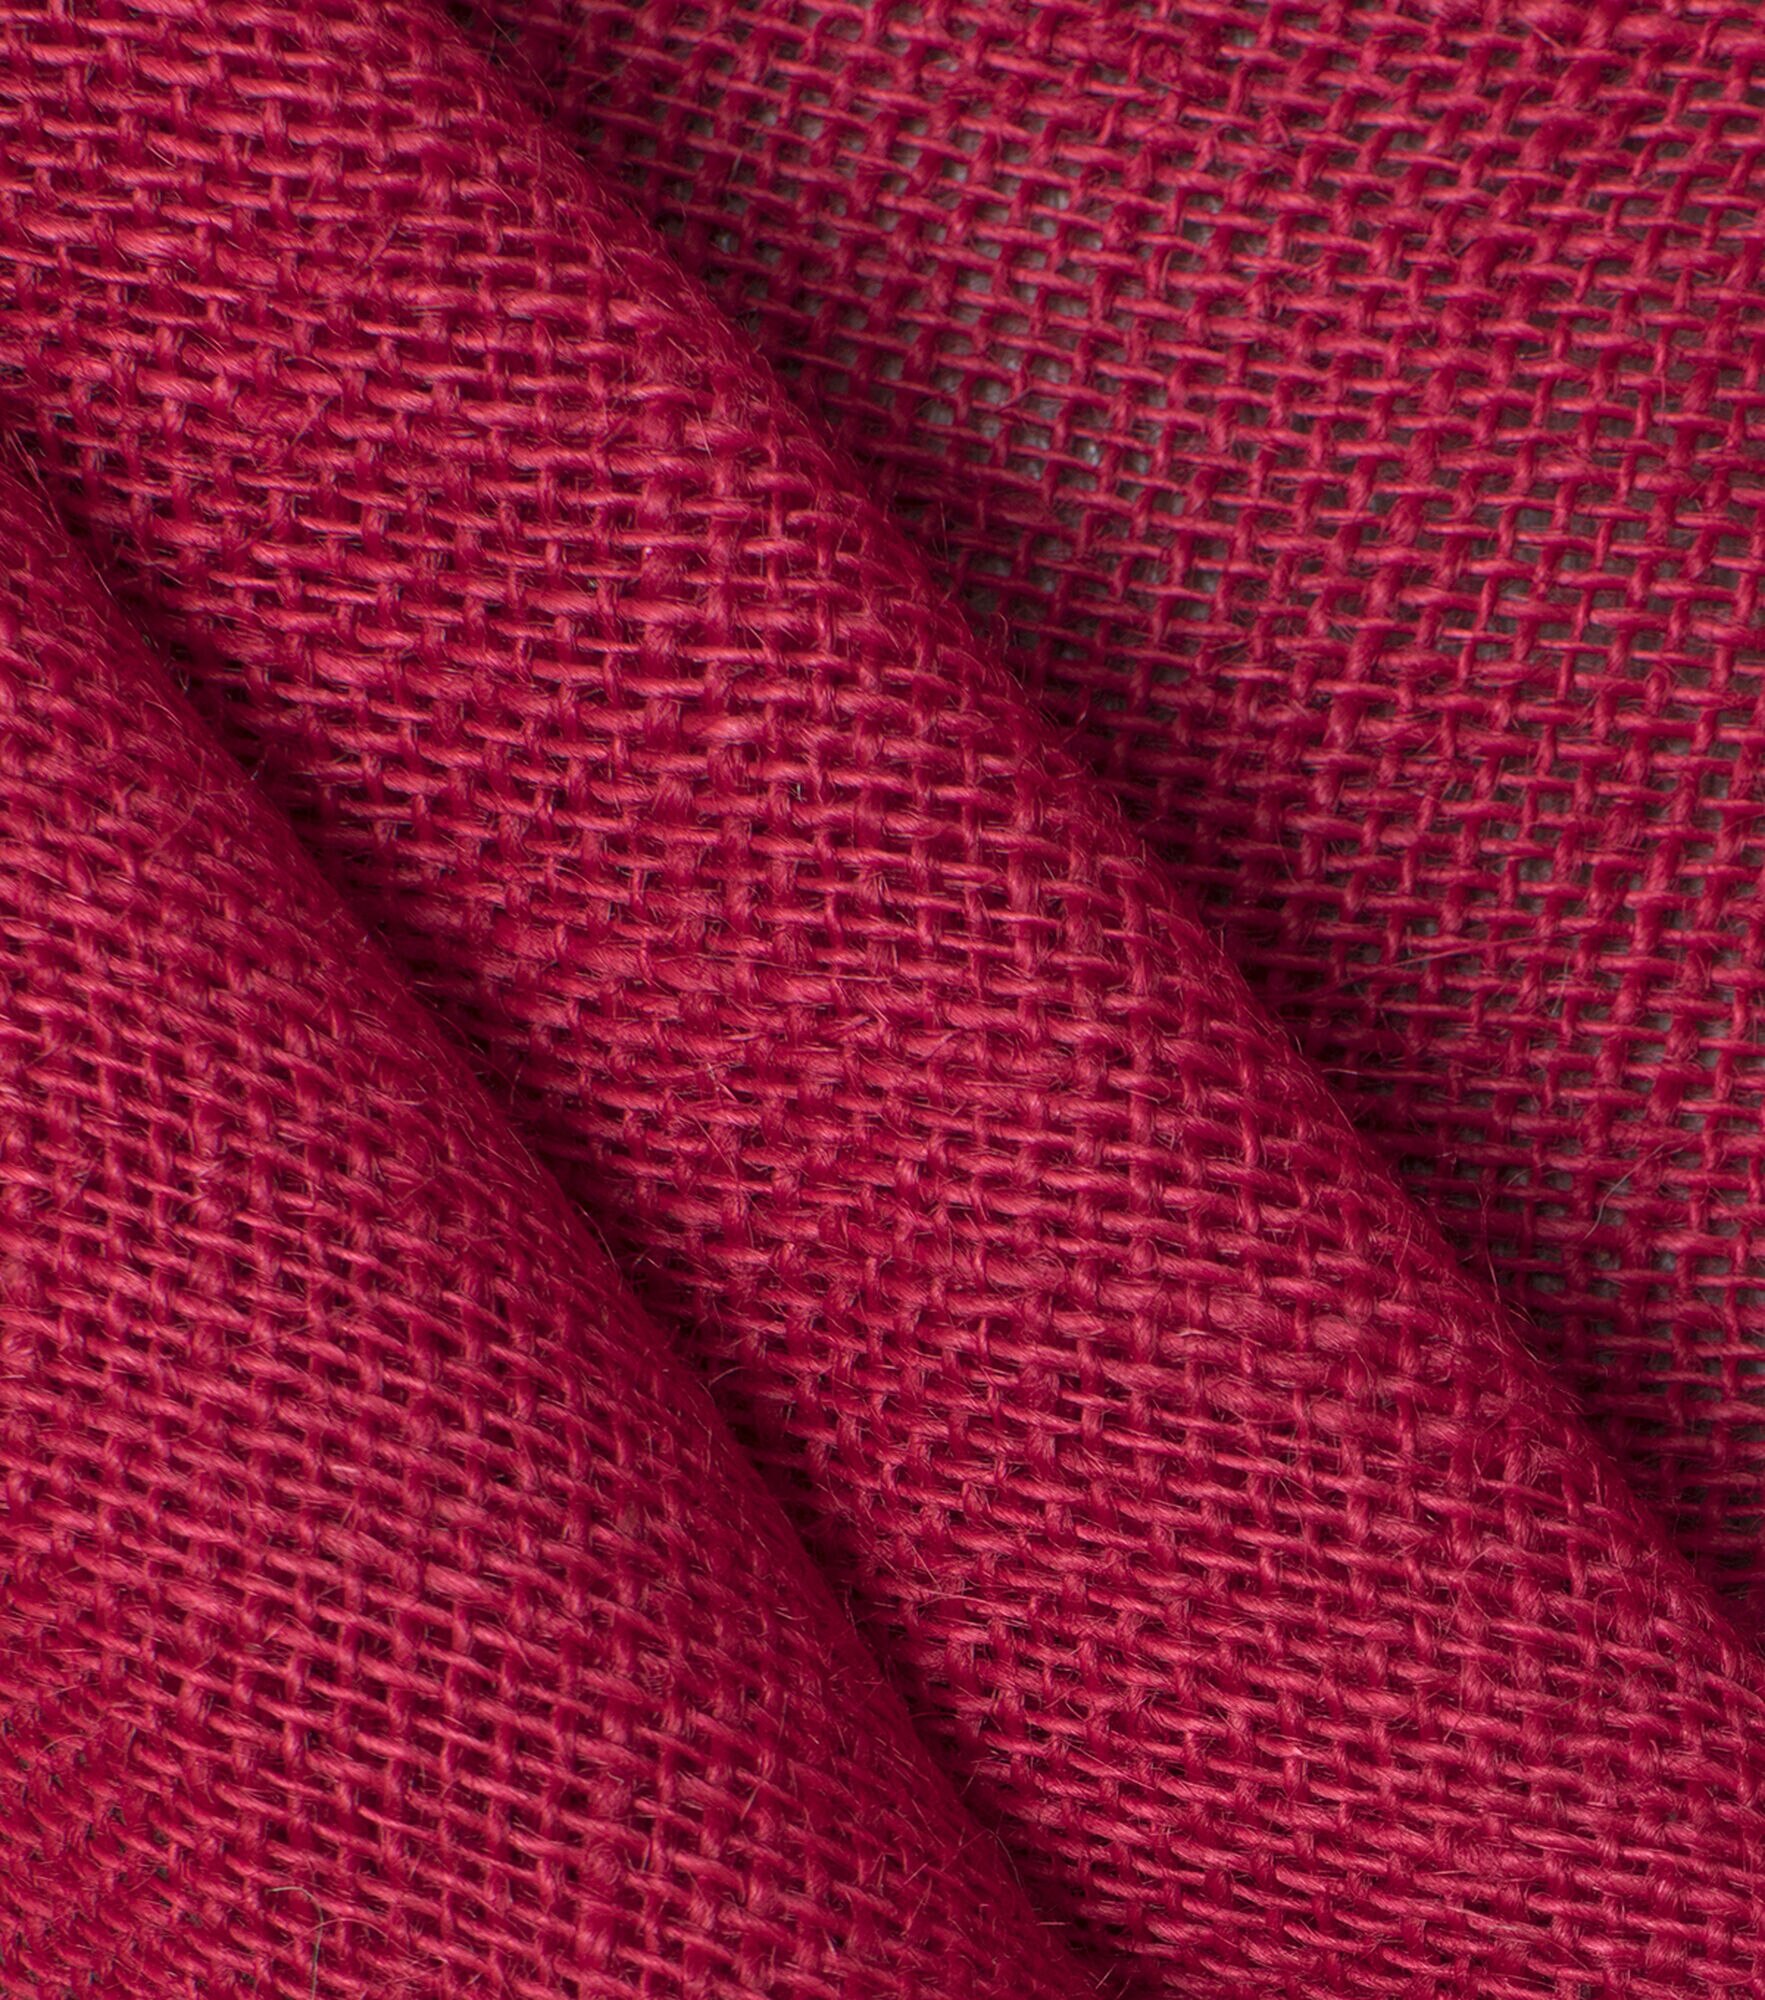 Ticking Fabric by burlapfabric.om (Olive)